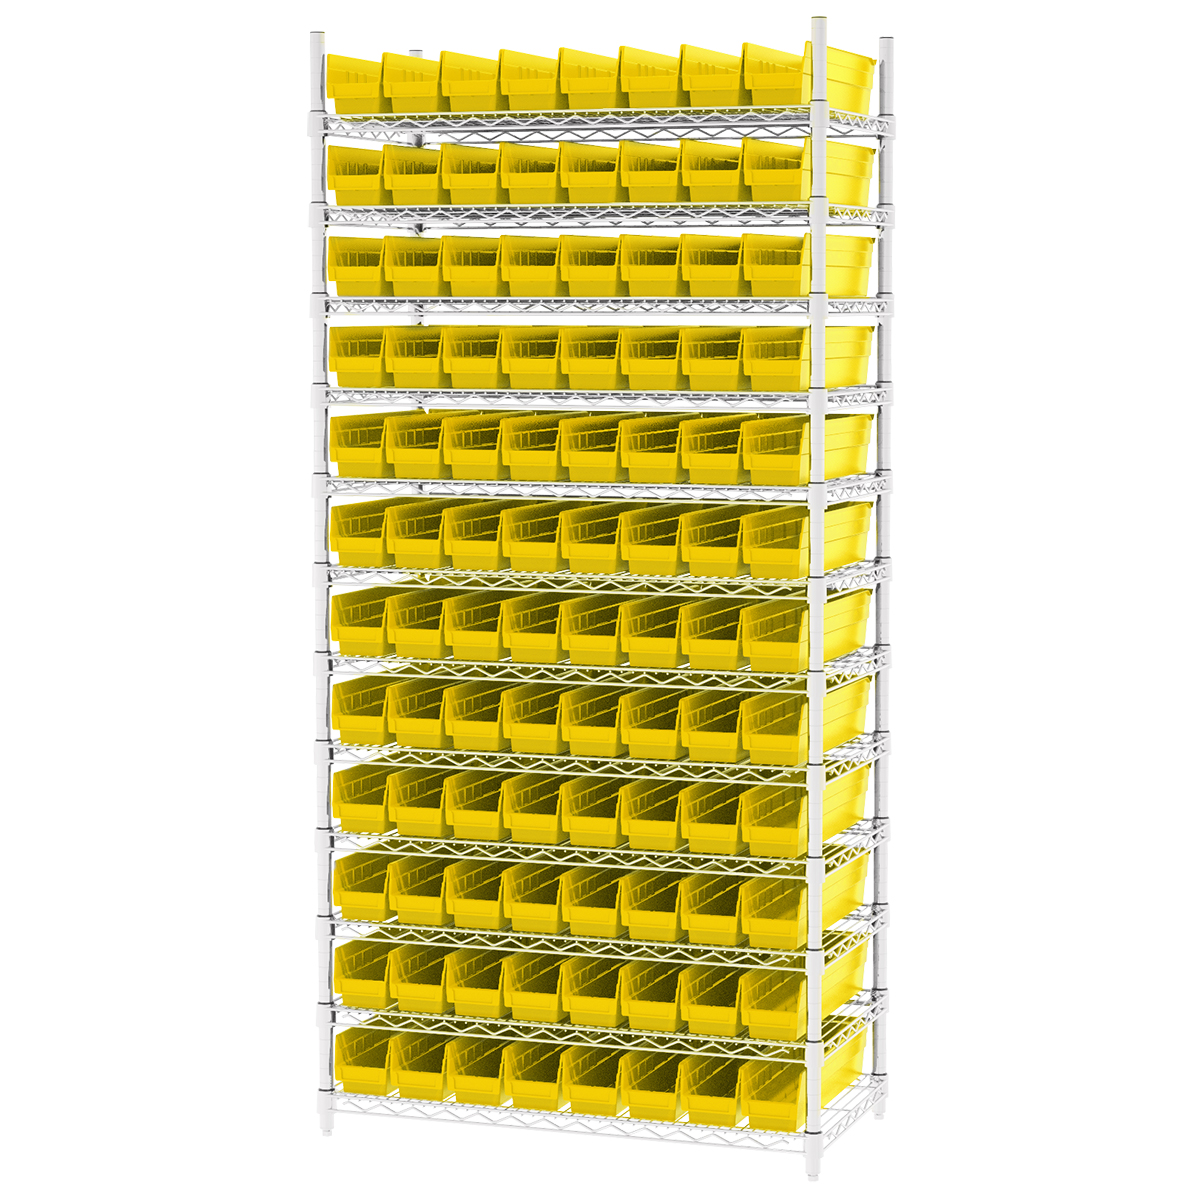 Wire Shelving Kits with 15 Preconfigured Storage Bins